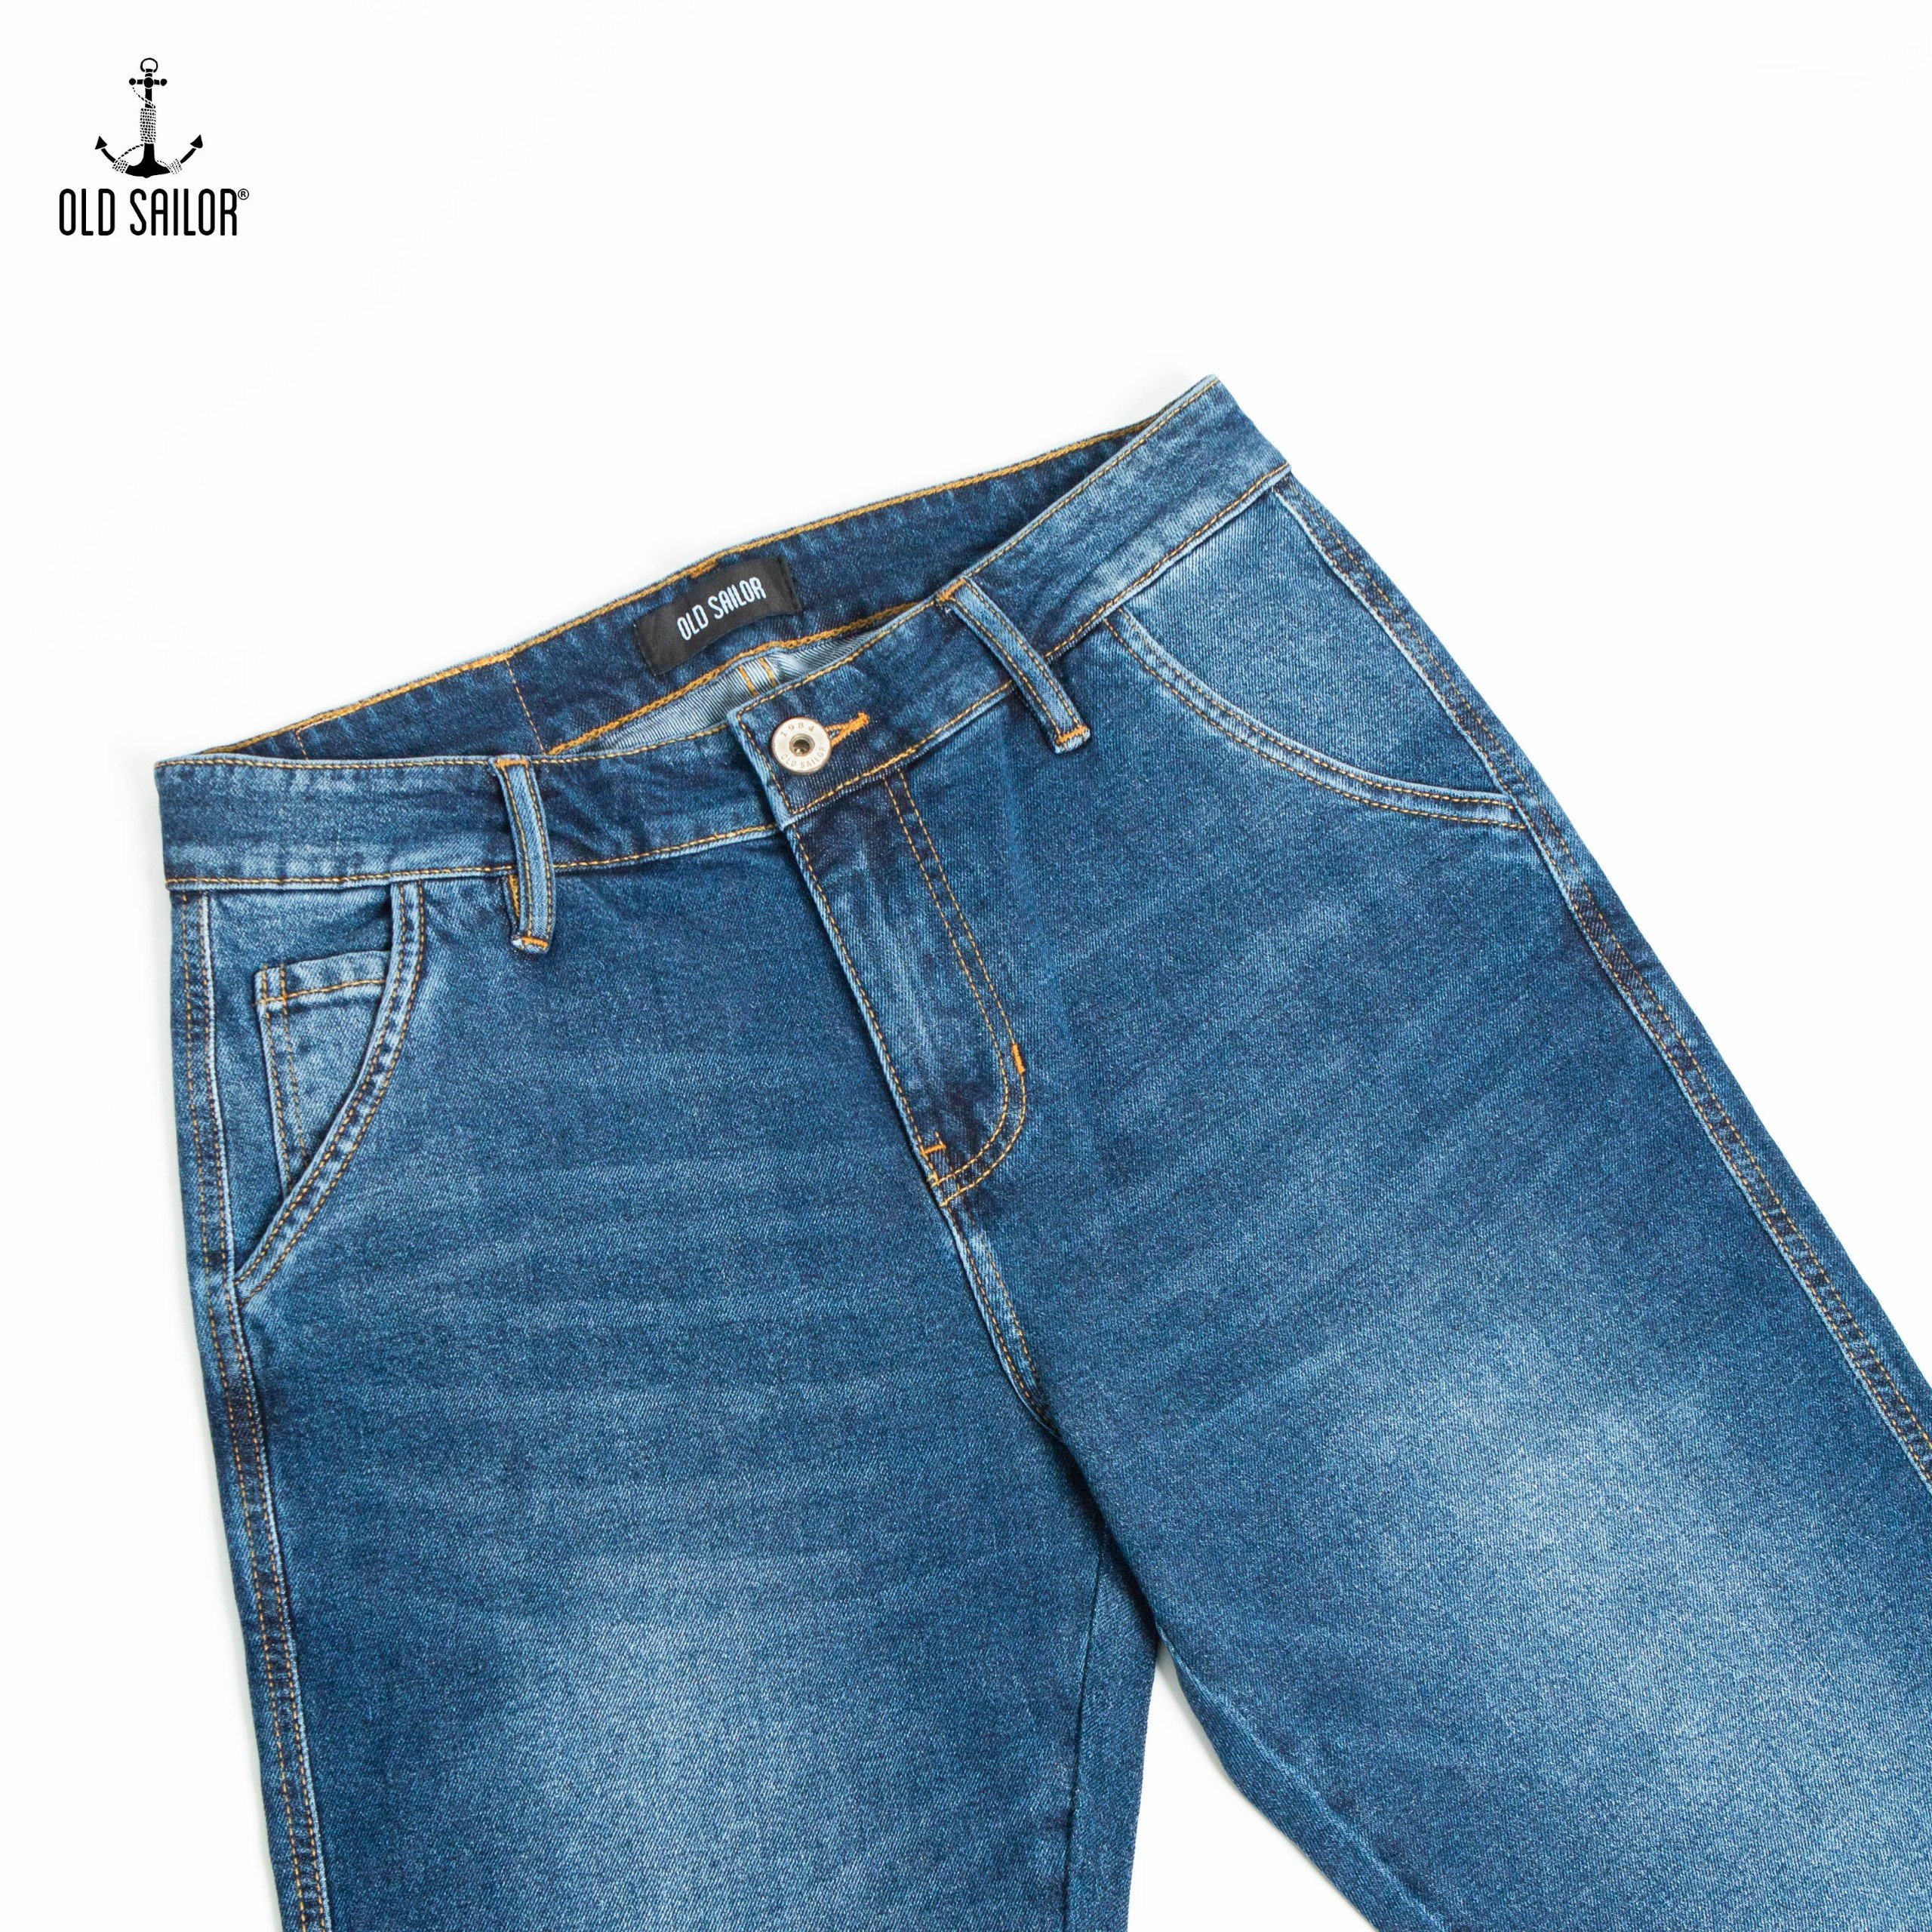 Quần Jeans Premium Straight - 6703 - Big Size Upto 5XL